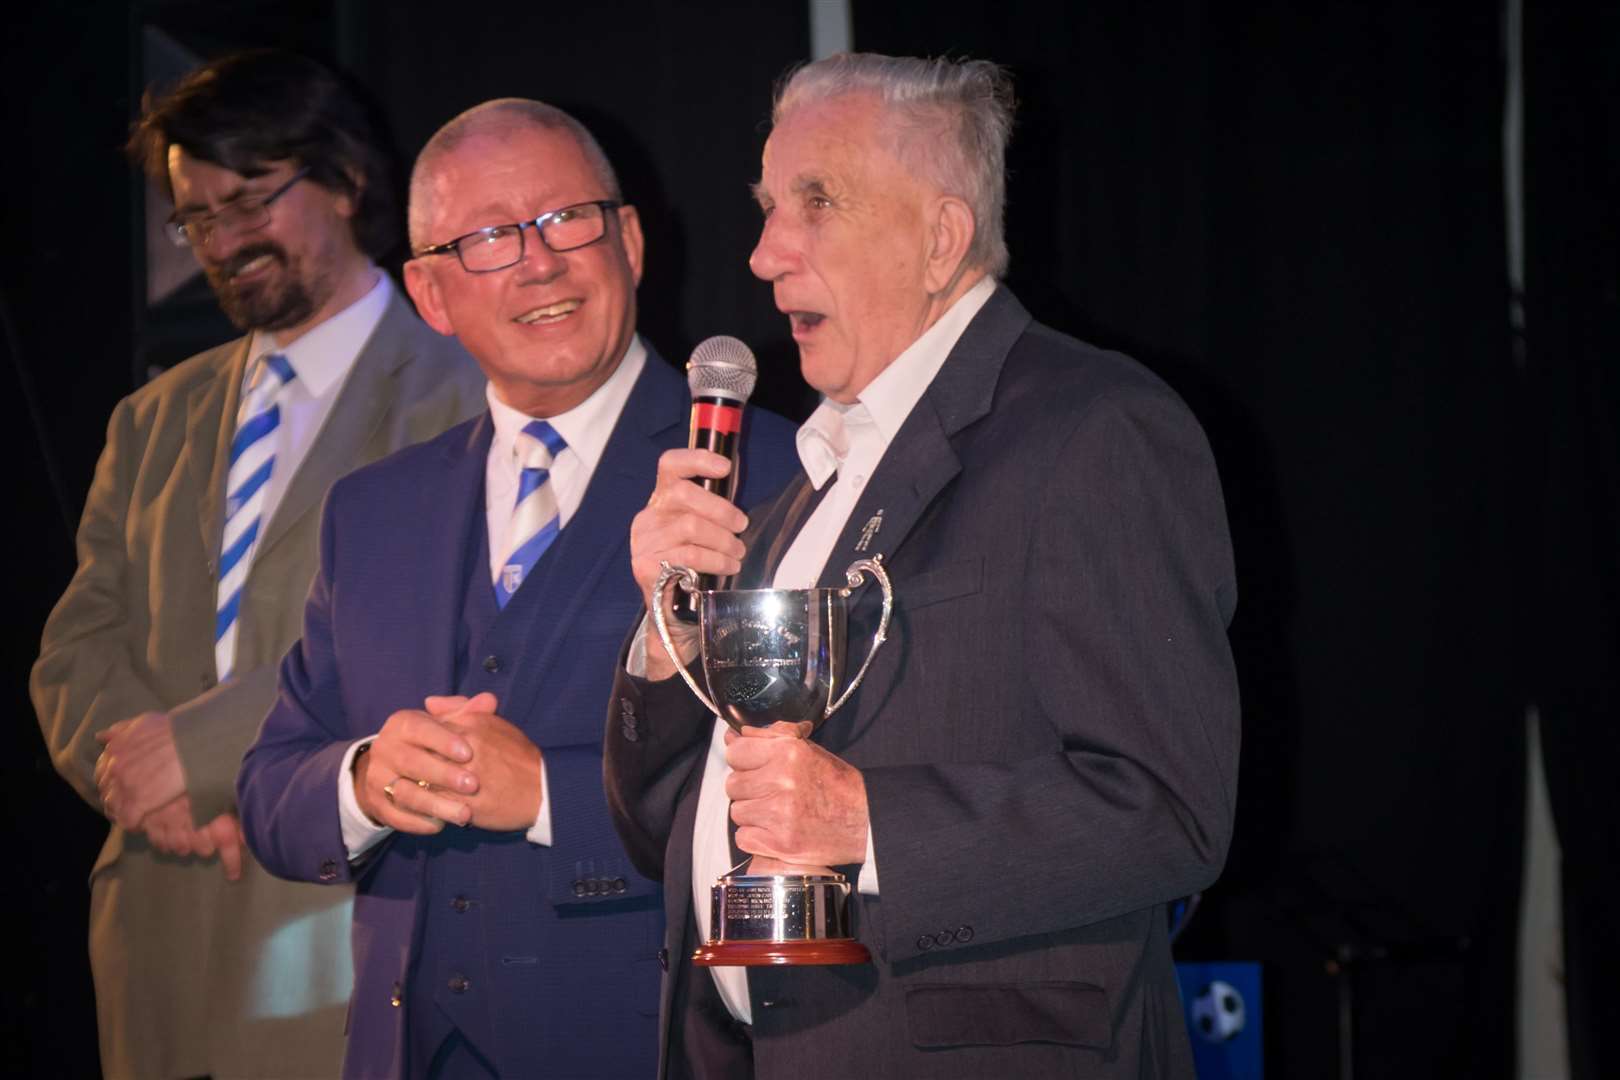 Chairman Paul Scally presents Eric Hawkins with his award